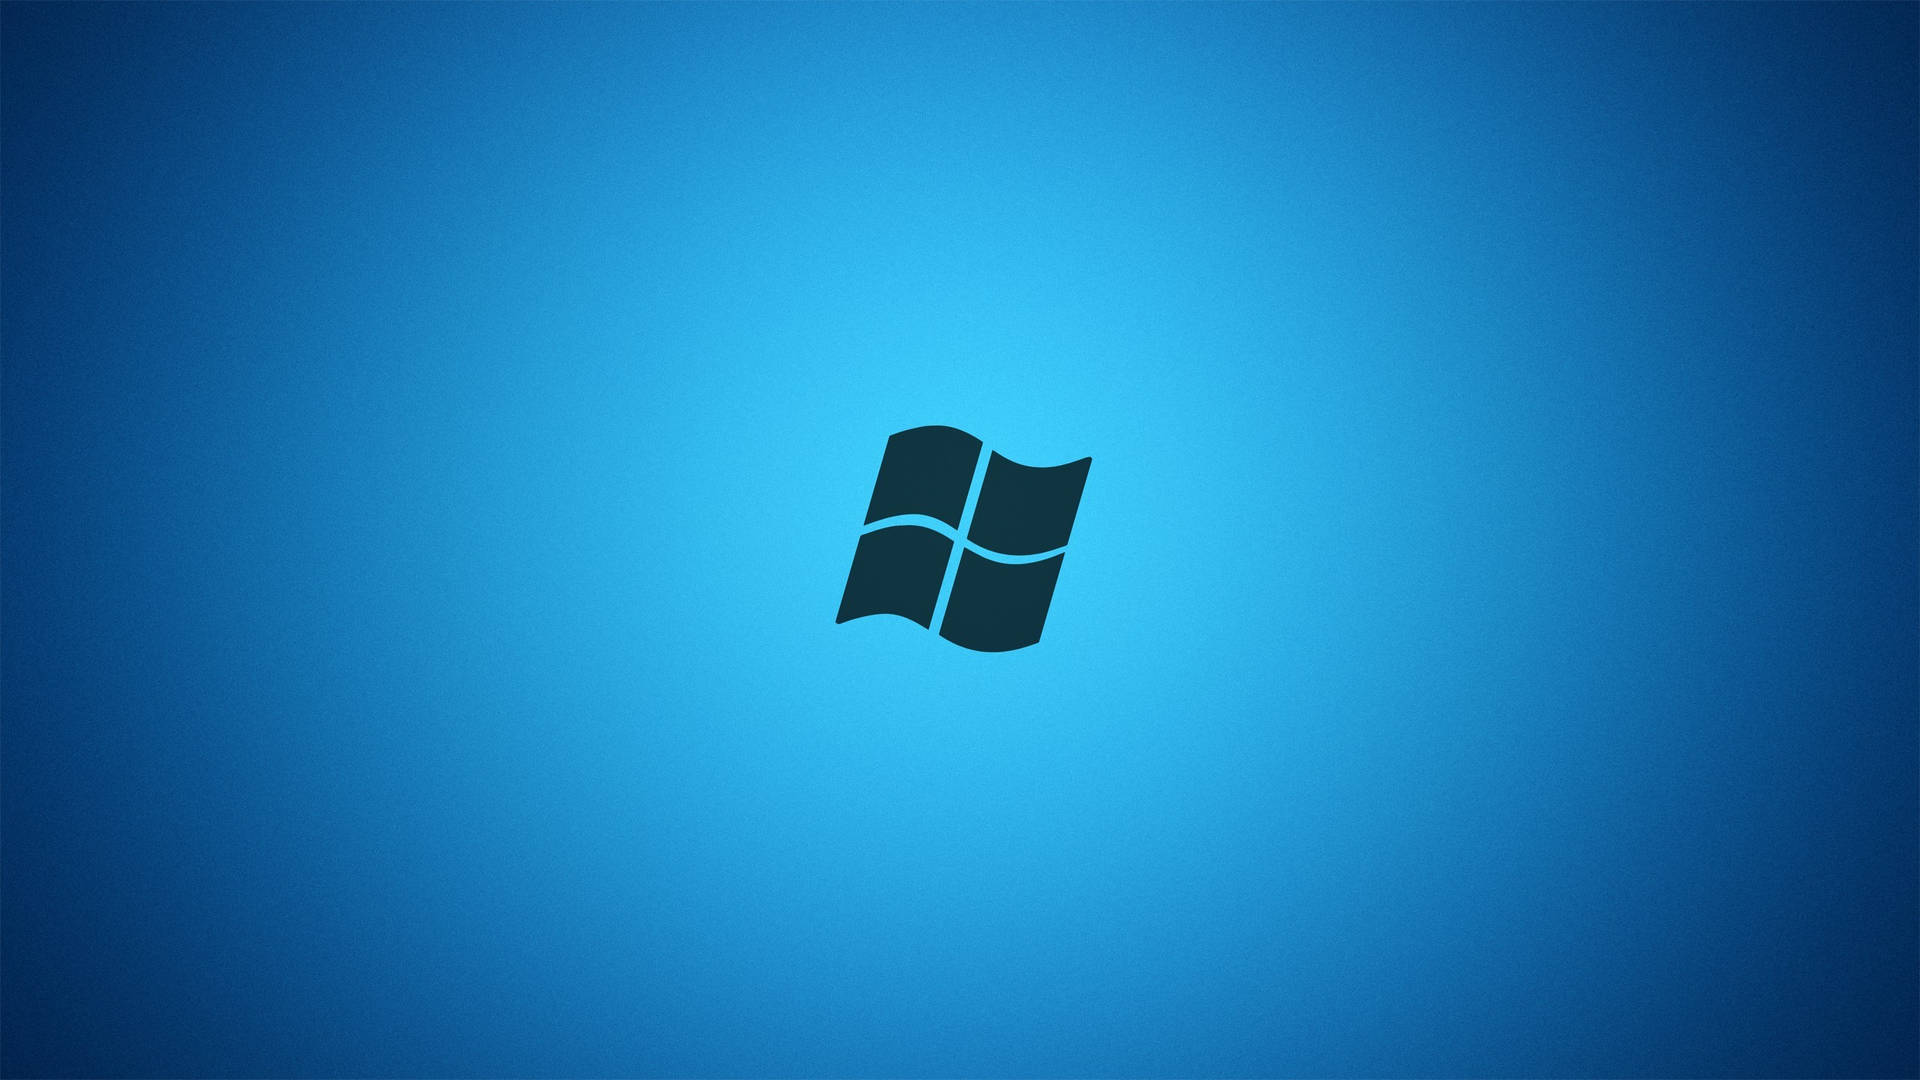 Minimalistic Blue And Black Windows 7 Screen Background